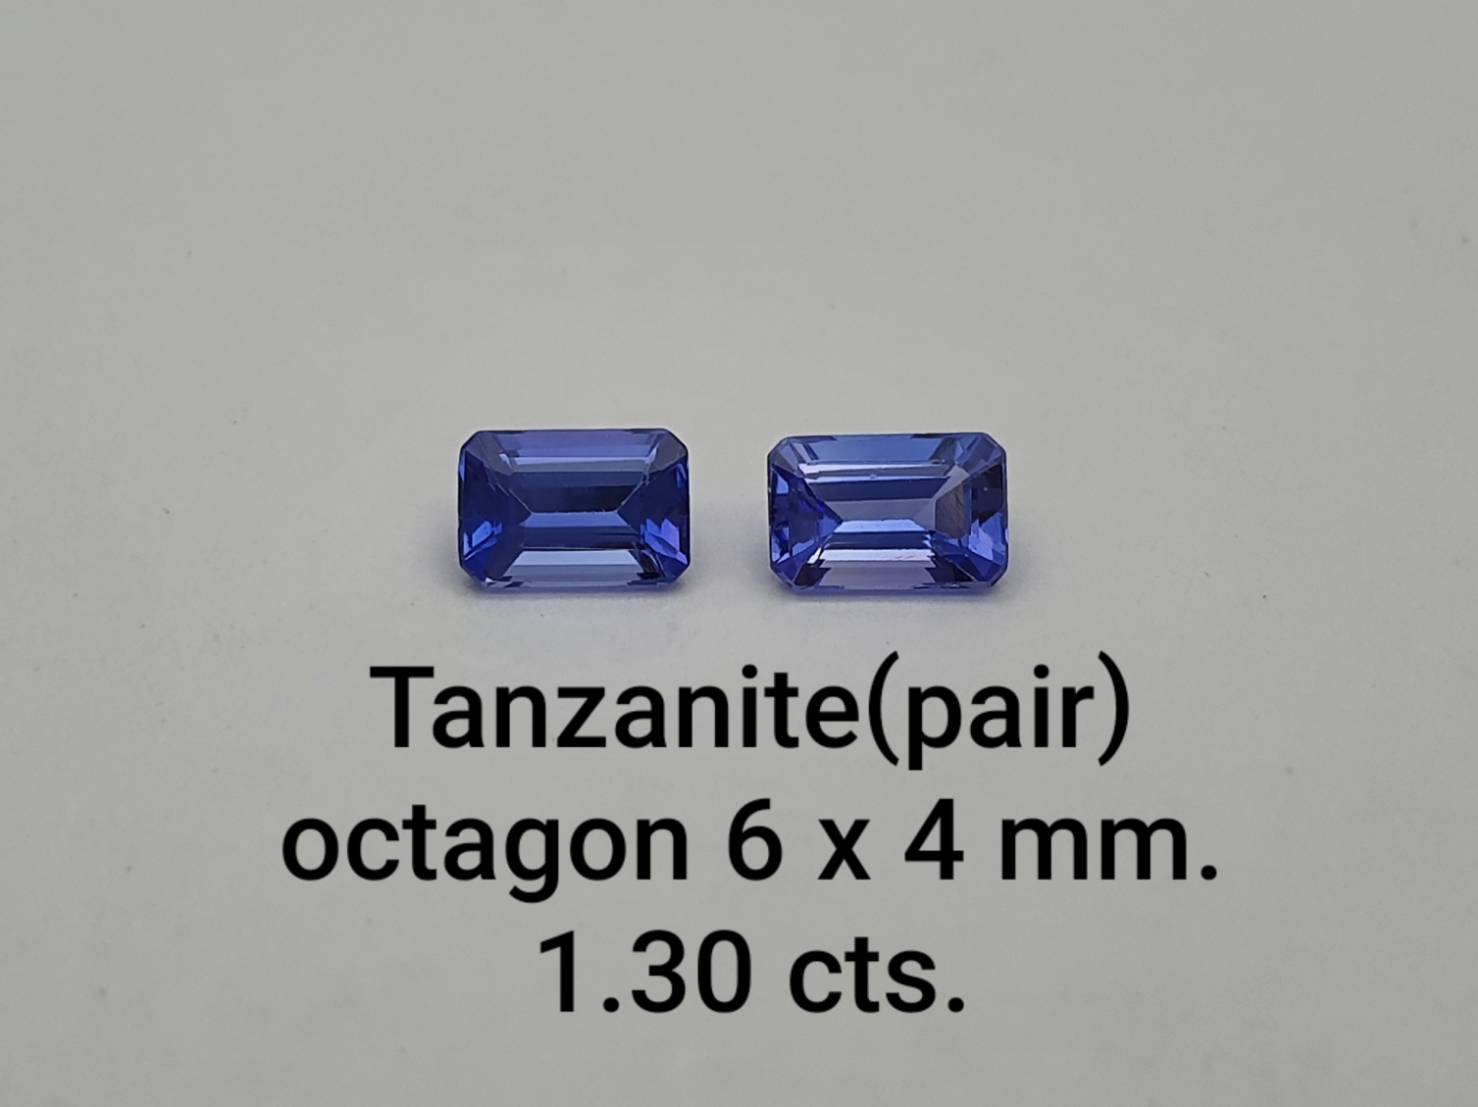 Tanzanite(pair) Octagon shape